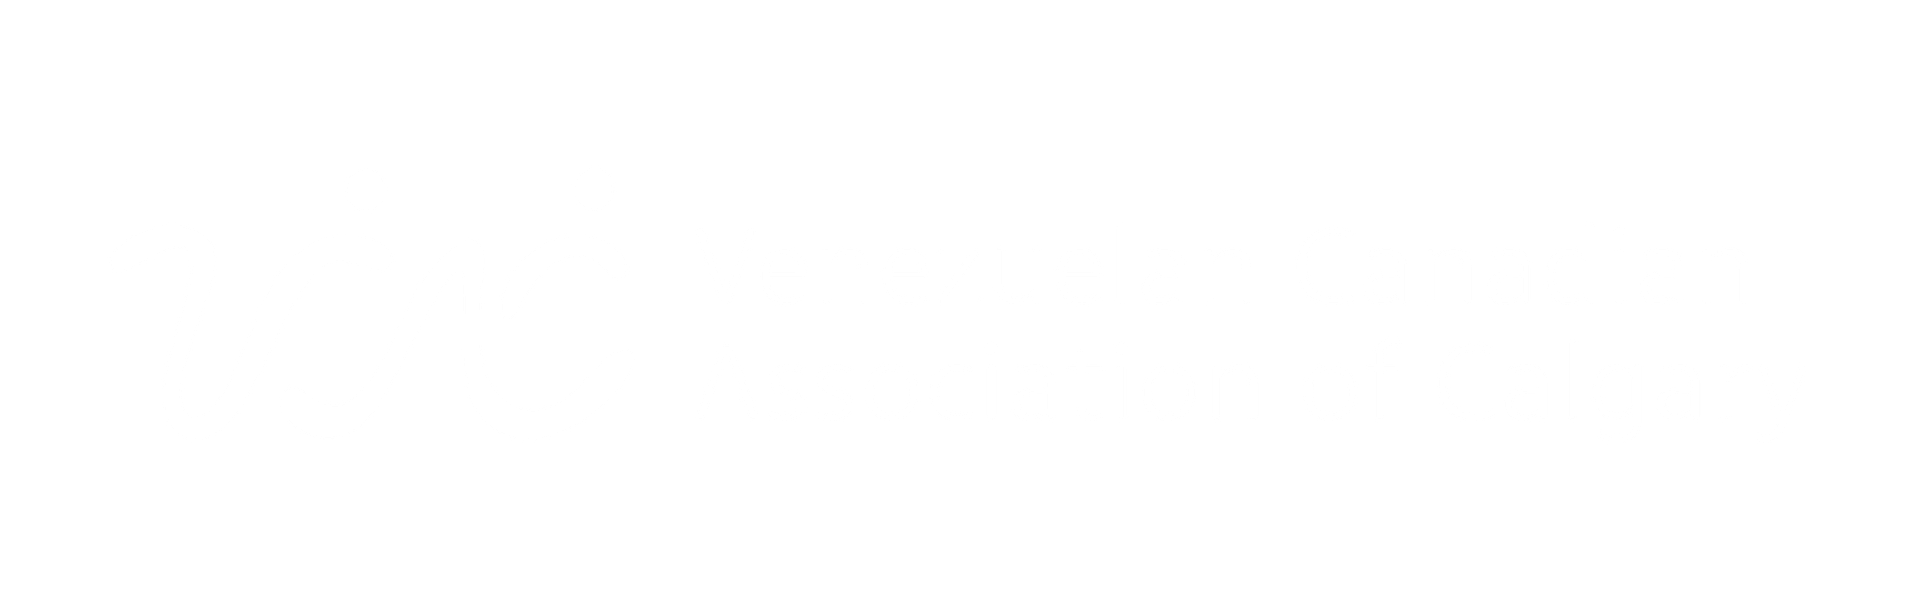 Venezuelan Canadian Association of Calgary